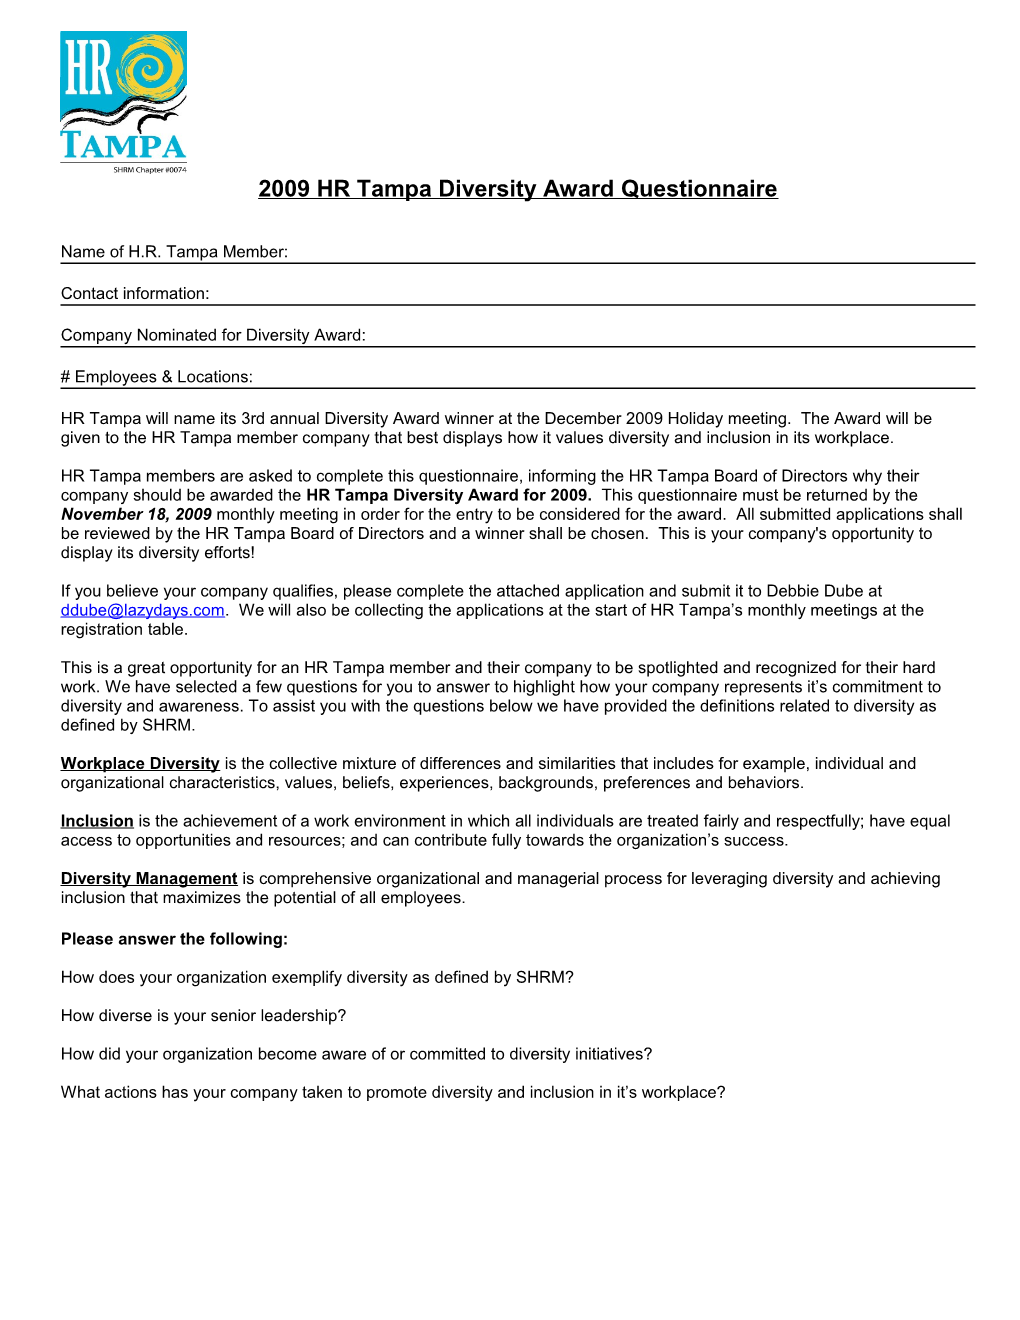 Hr Tampa Diversity Award Questionare